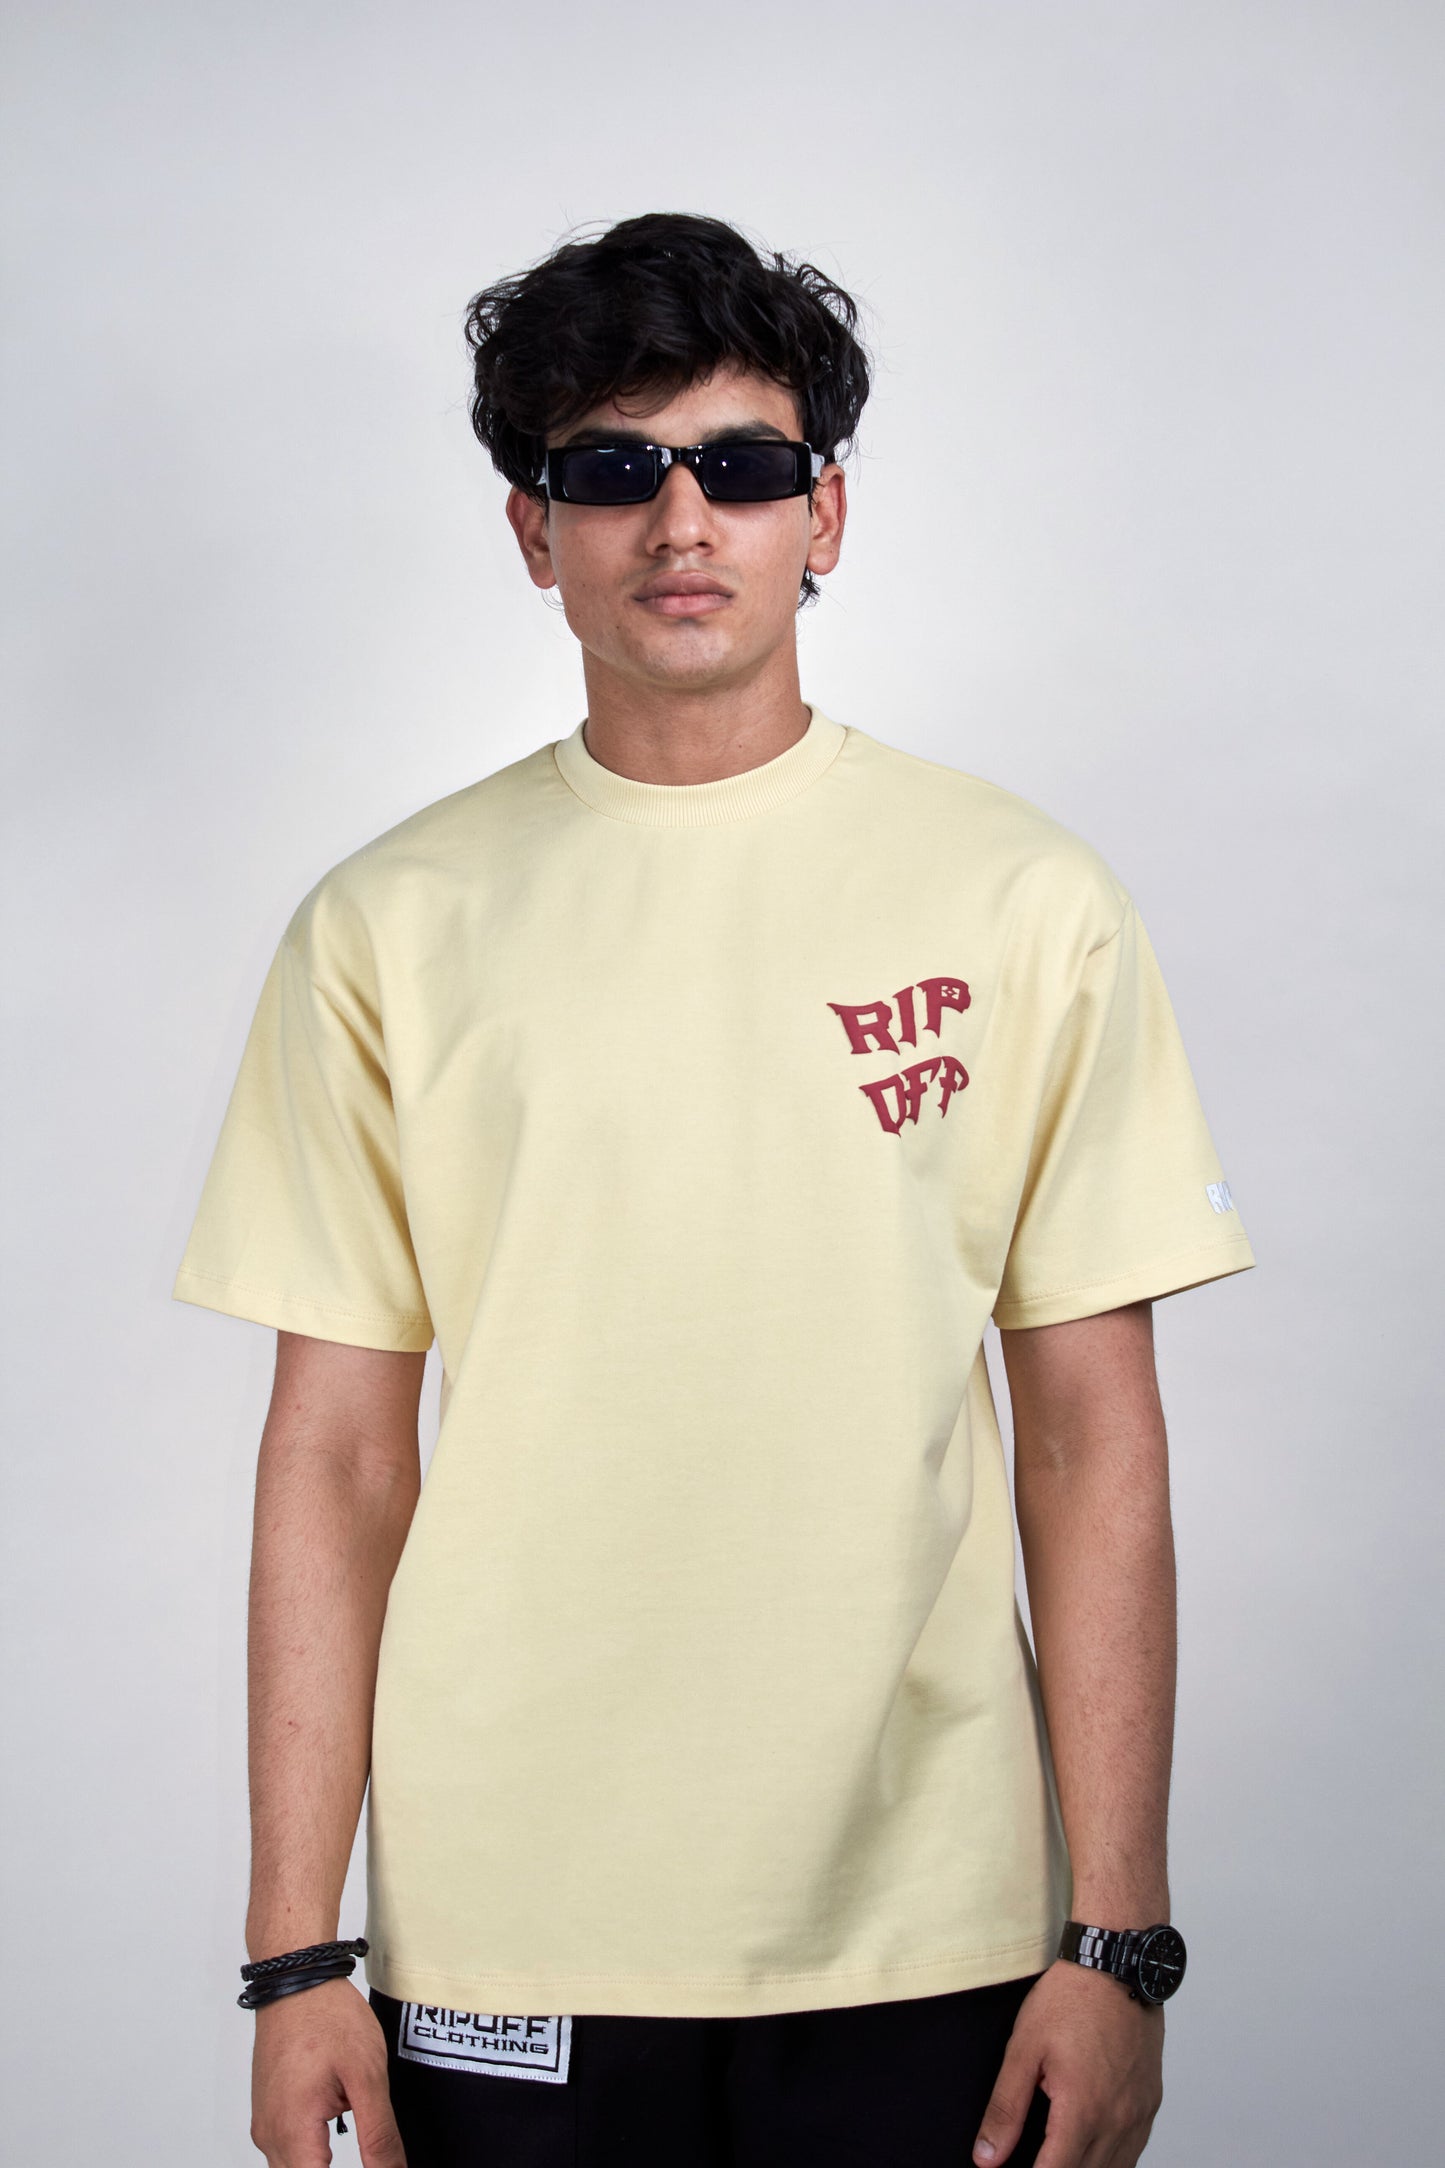 Paranoia Tee (Oversized Tshirts) by Ripoff